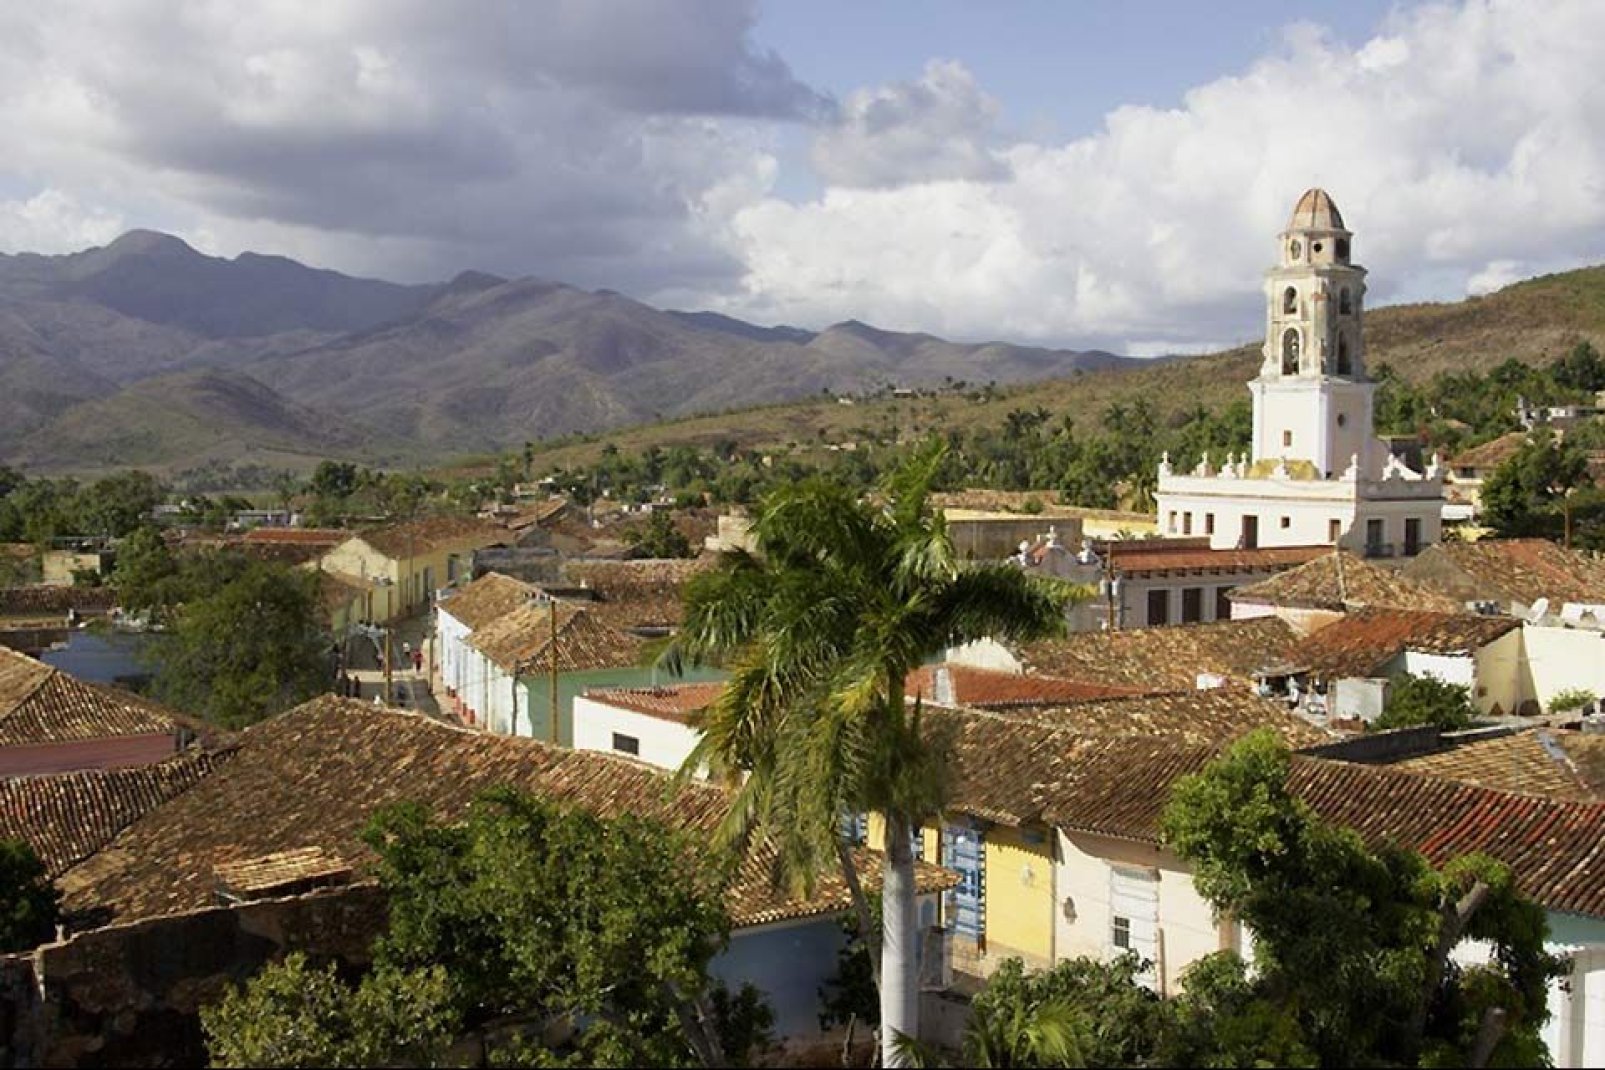 Trinidad ha circa 75.000 abitanti ed è situata nella provincia di Sancti Spíritus.